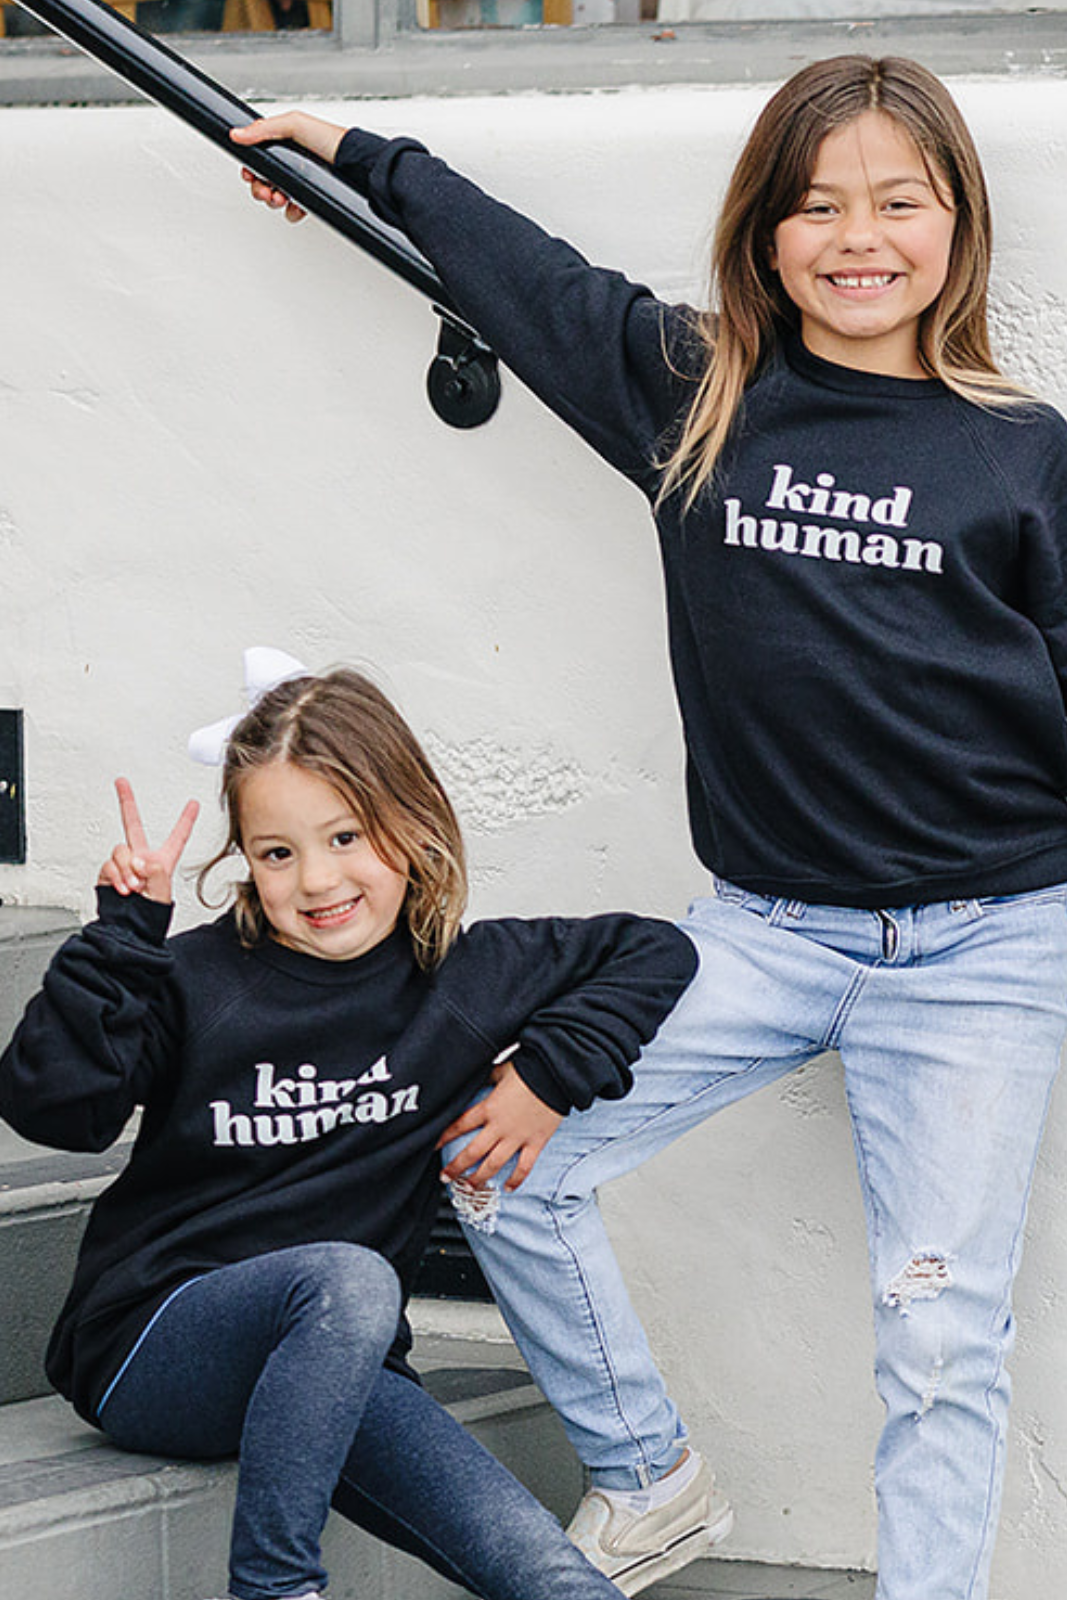 Kind Human Sweatshirt for Big Kids